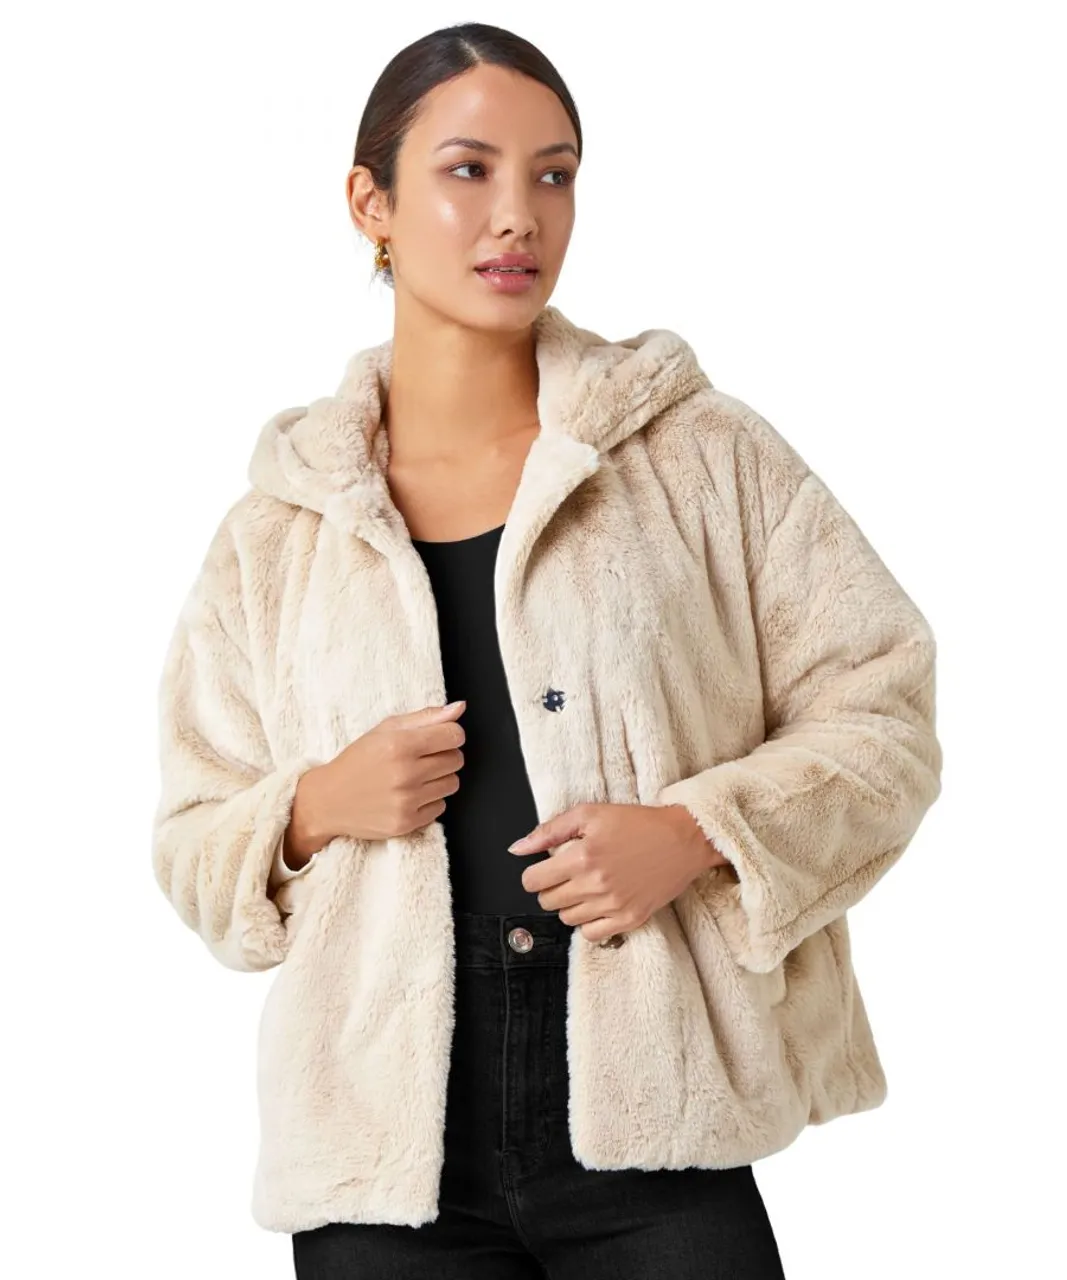 Roman Womens Faux Fur Hooded Jacket - Natural